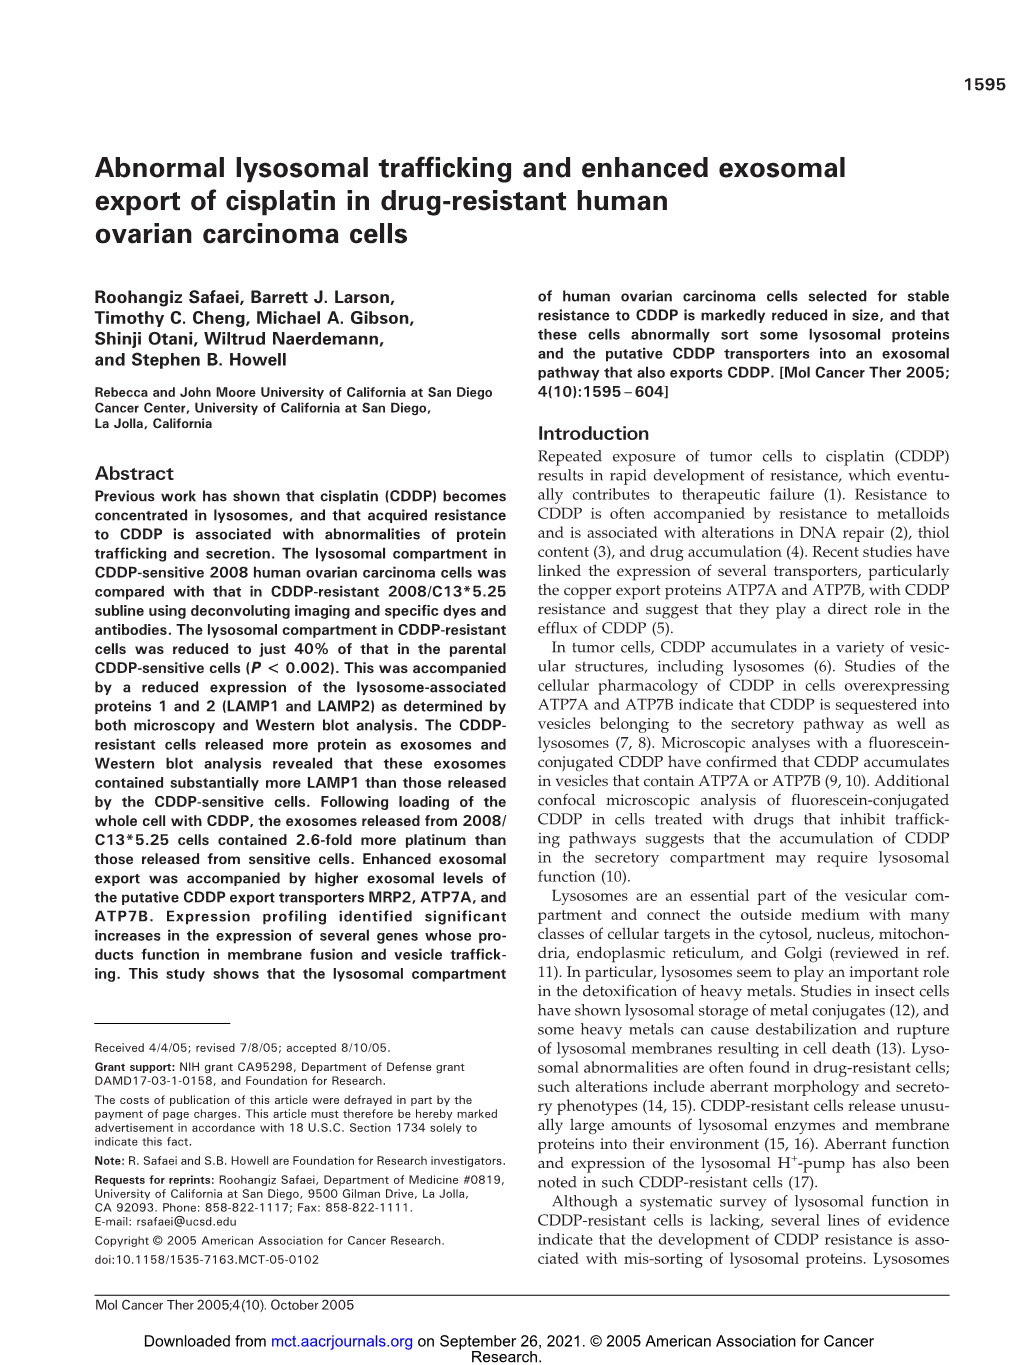 Abnormal Lysosomal Trafficking and Enhanced Exosomal Export of Cisplatin in Drug-Resistant Human Ovarian Carcinoma Cells